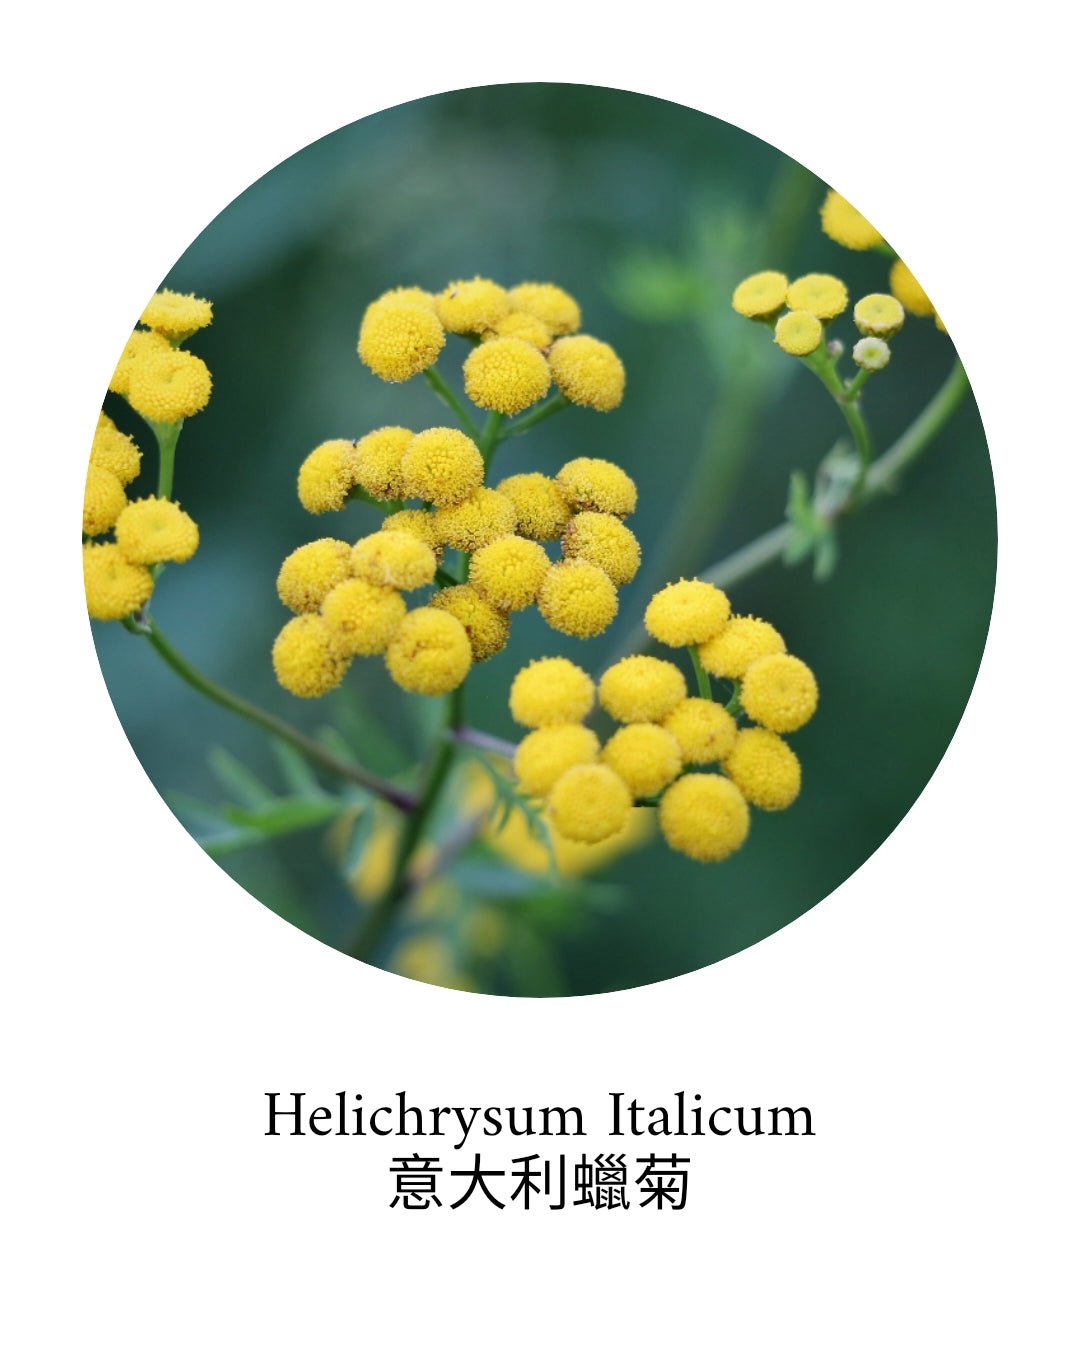 Helichrysum (Immortelle) Essential Oil - APTIVA